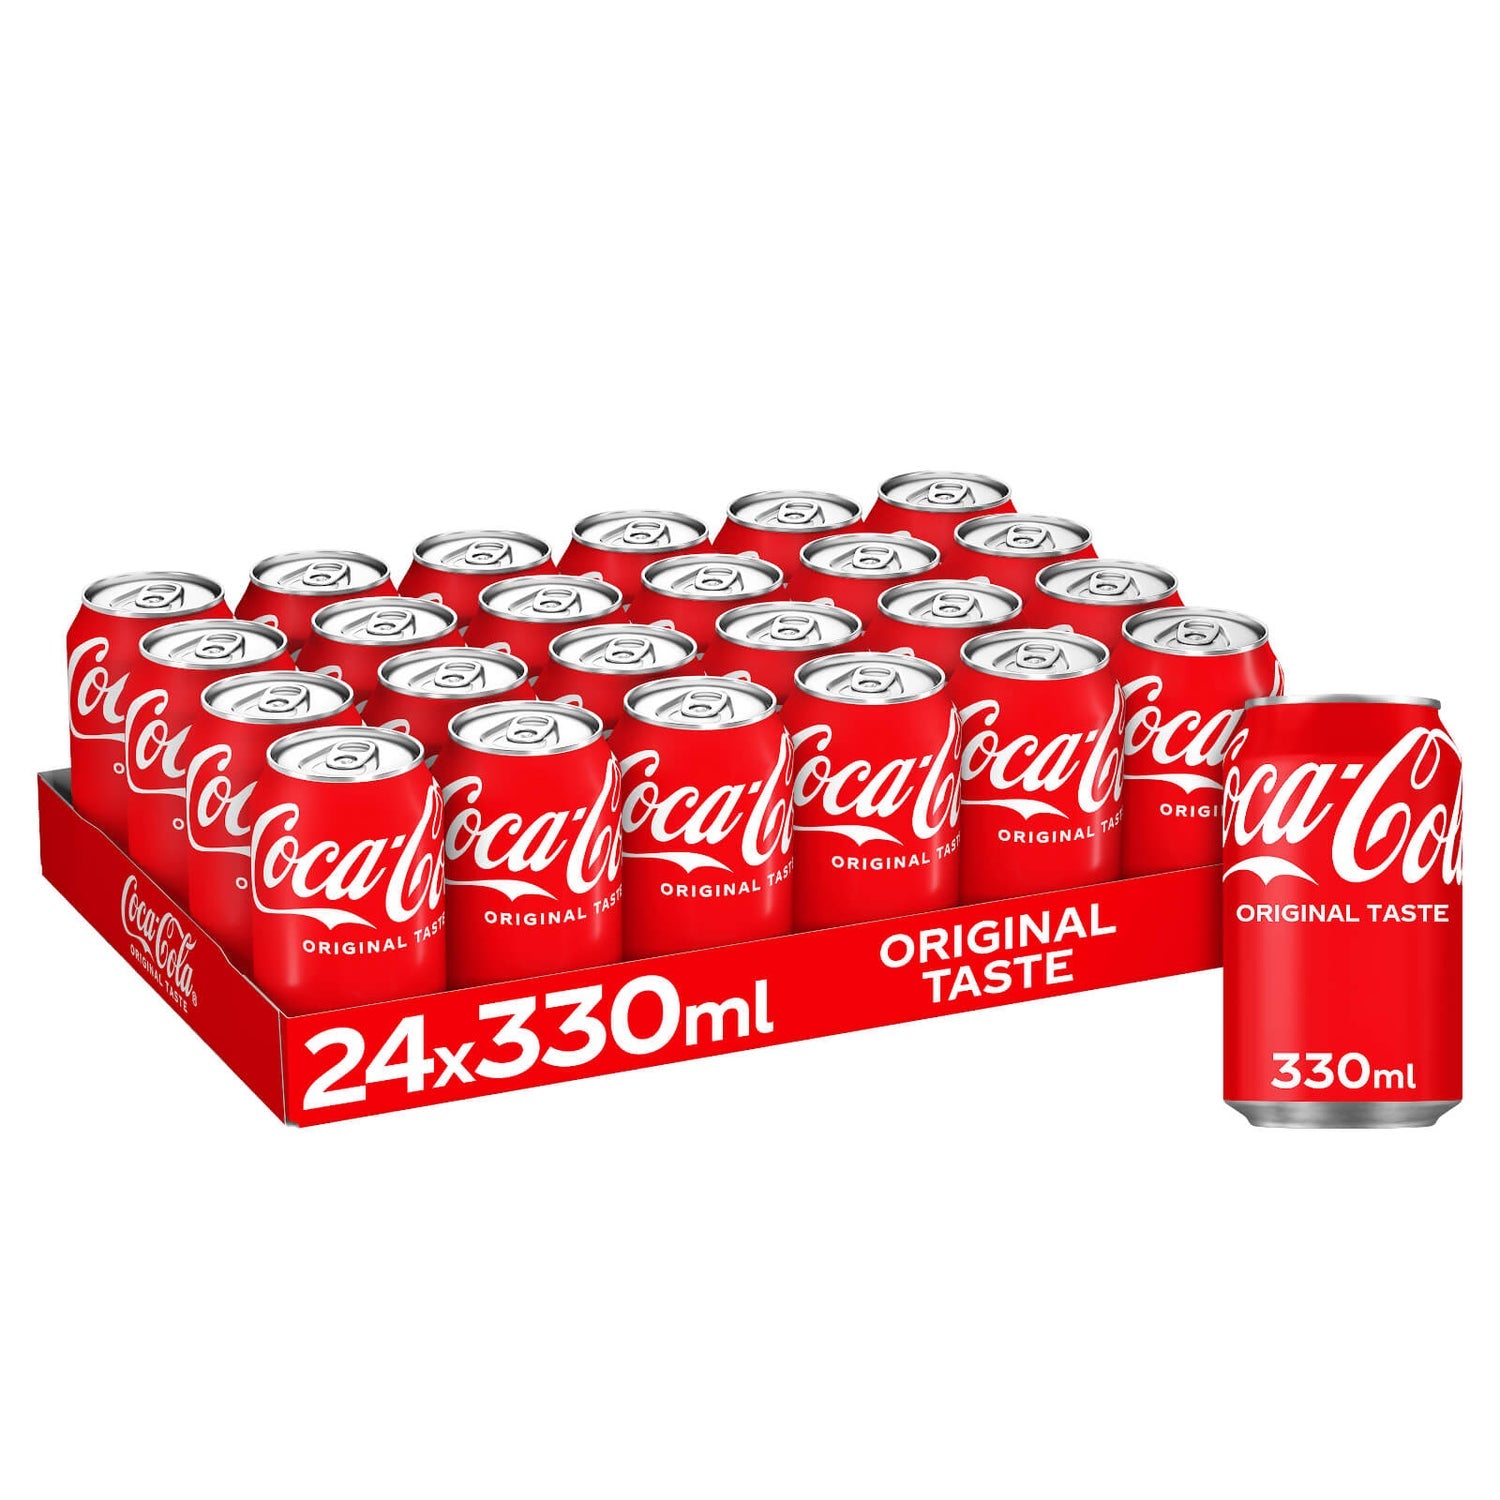 Coca Cola - 330ml (4 x 6 Pack)